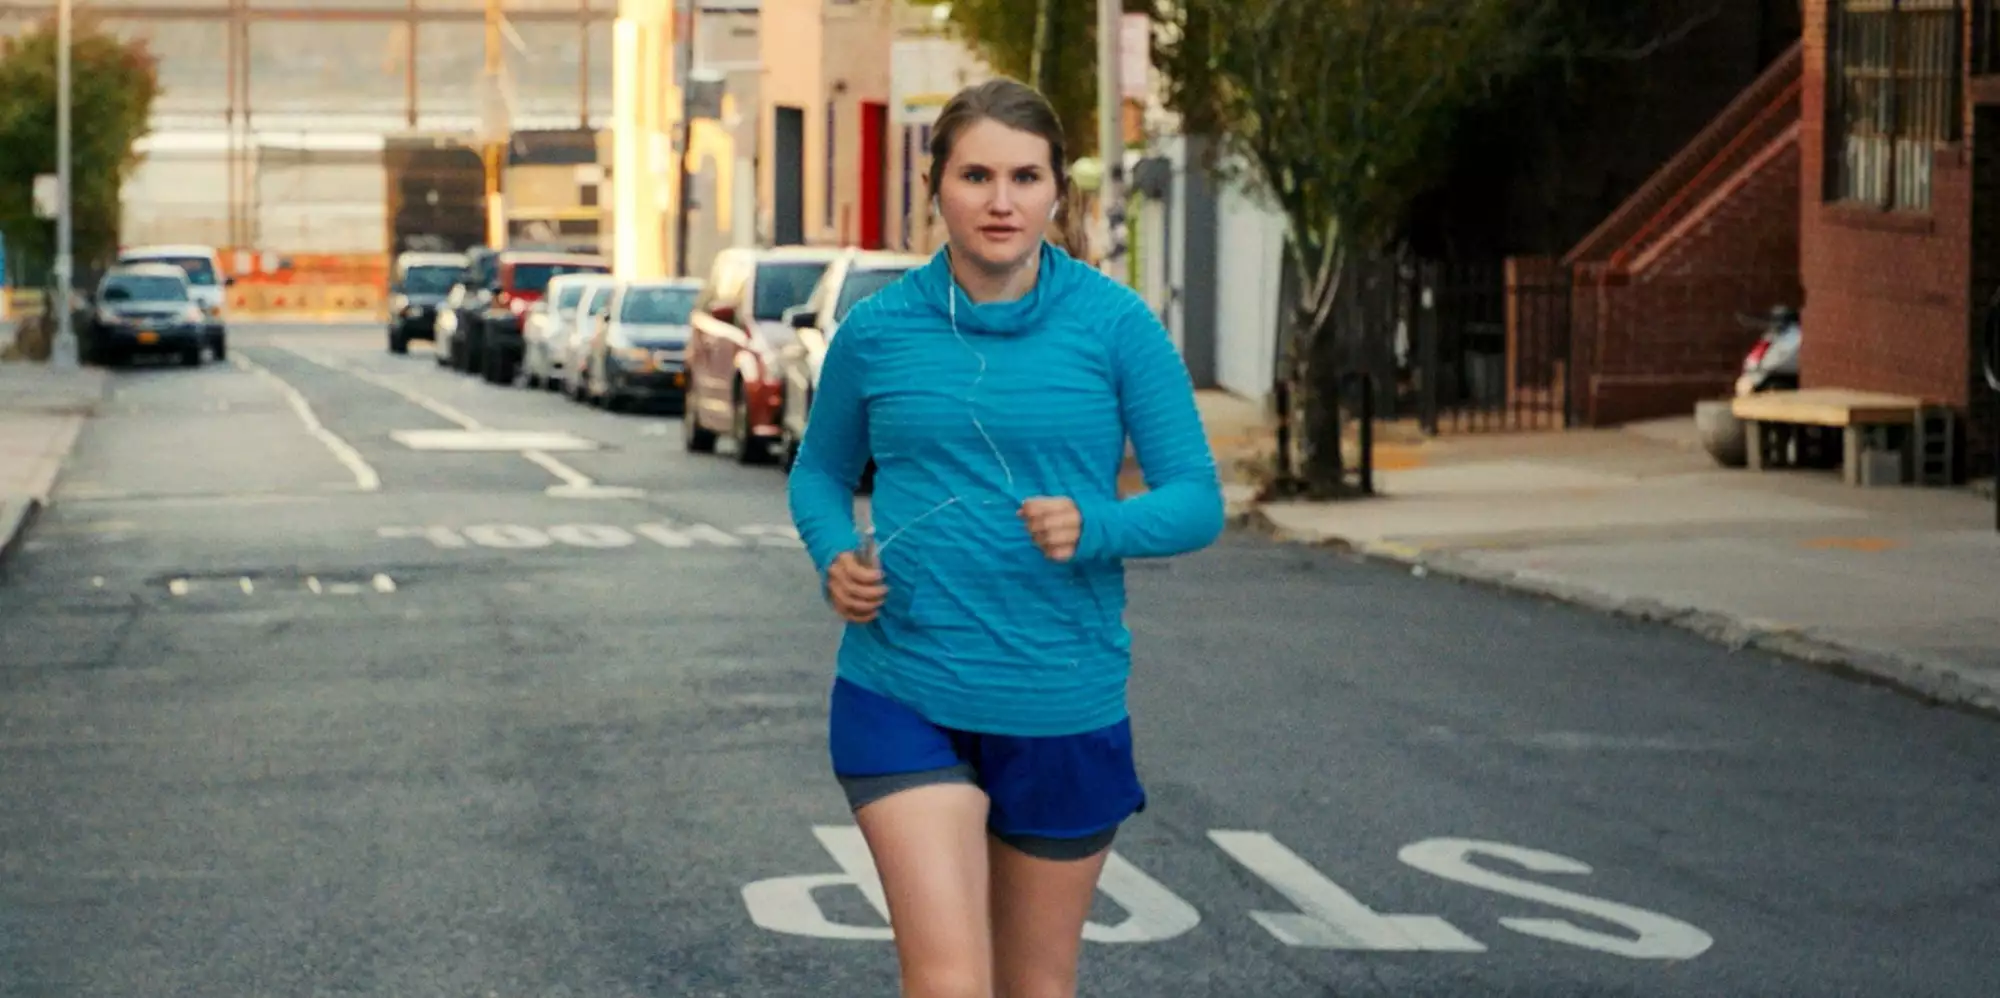 feel good movies on amazon prime: Brittany Runs A Marathon